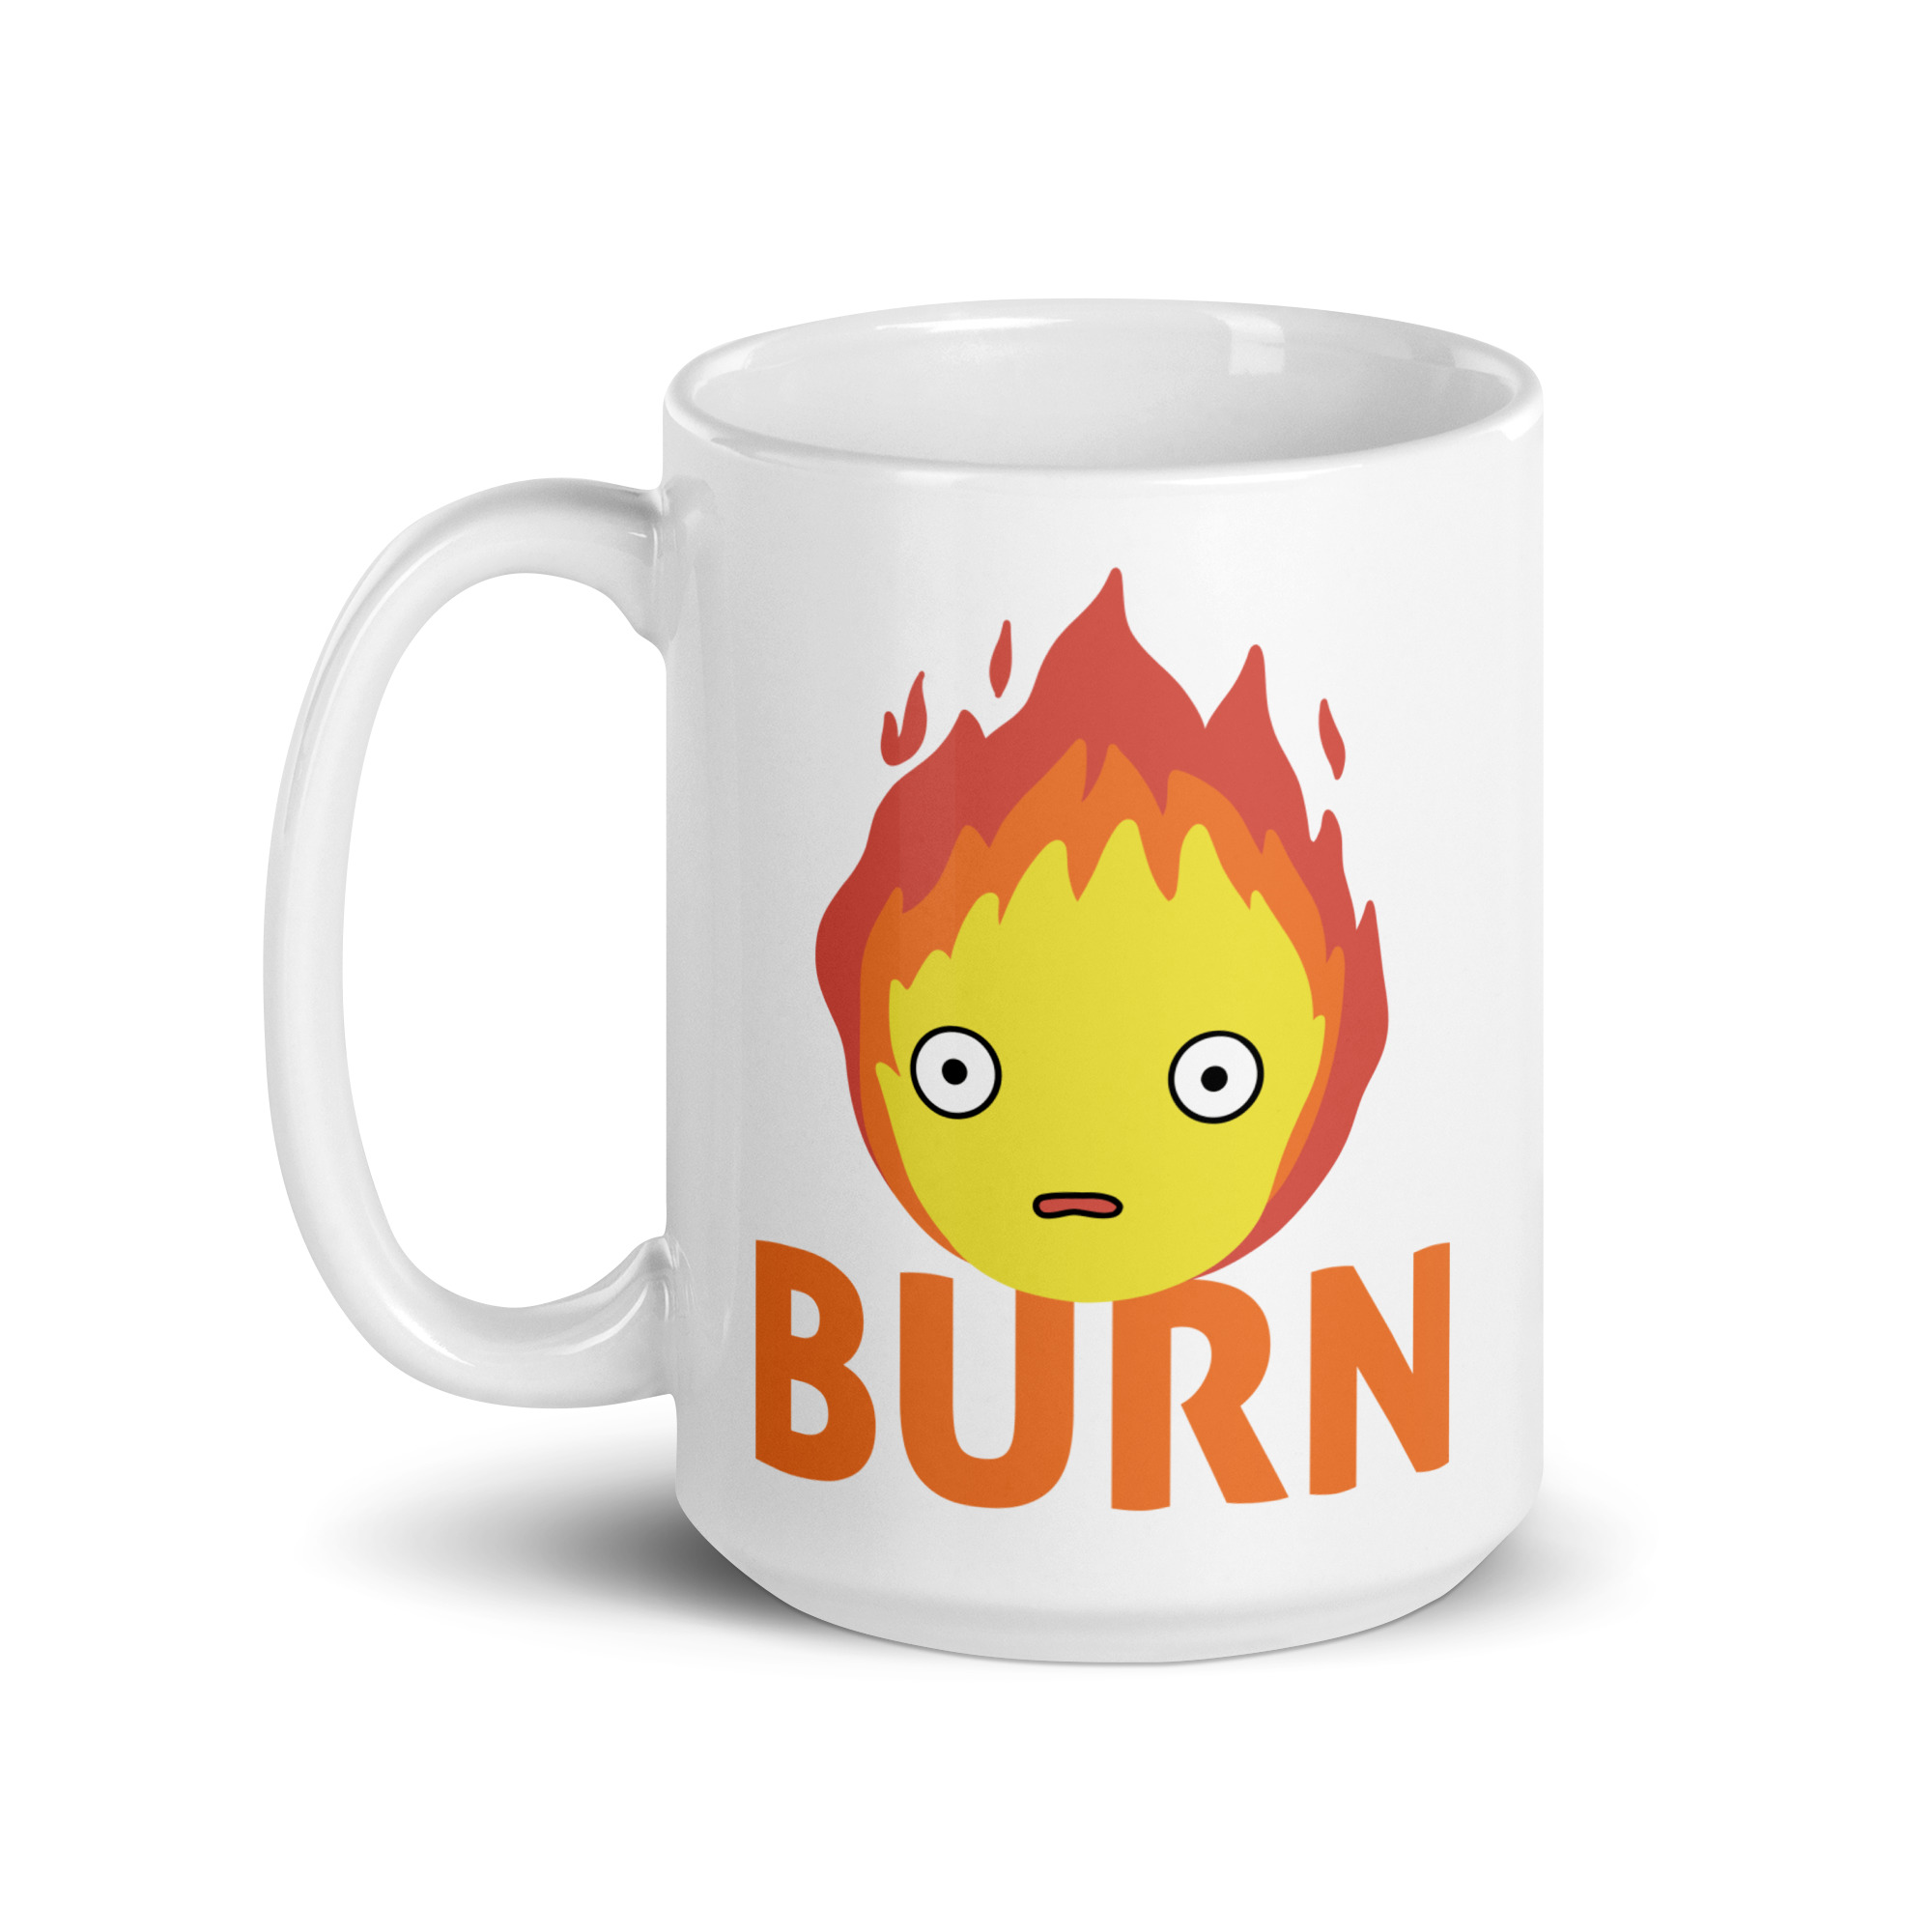 Animated Fire Burn Mug by Wilde Designs